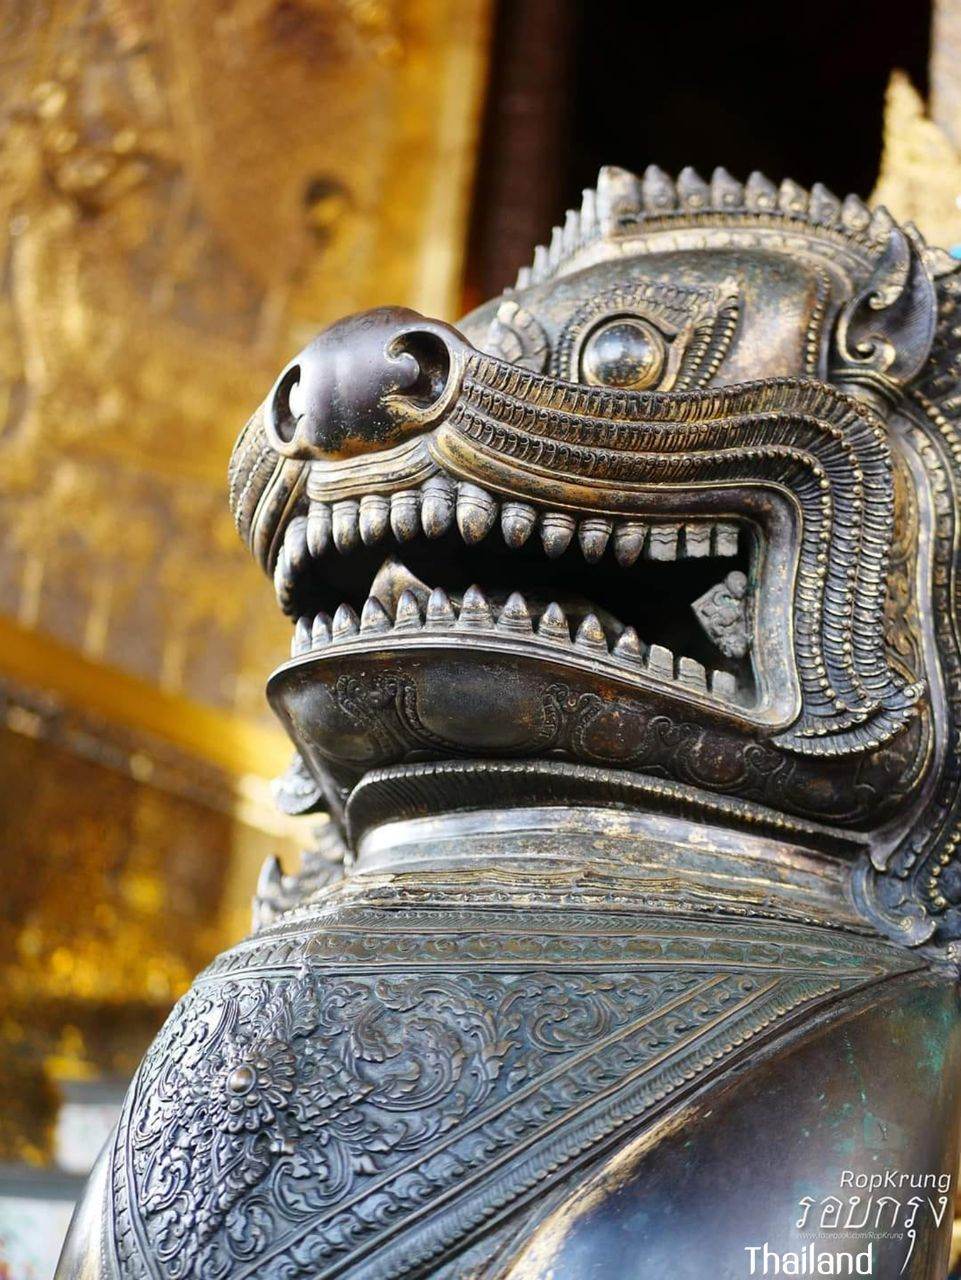 THAILAND 🇹🇭 | The Singha statue in wat phra kaew - Thai royal palace, Bangkok